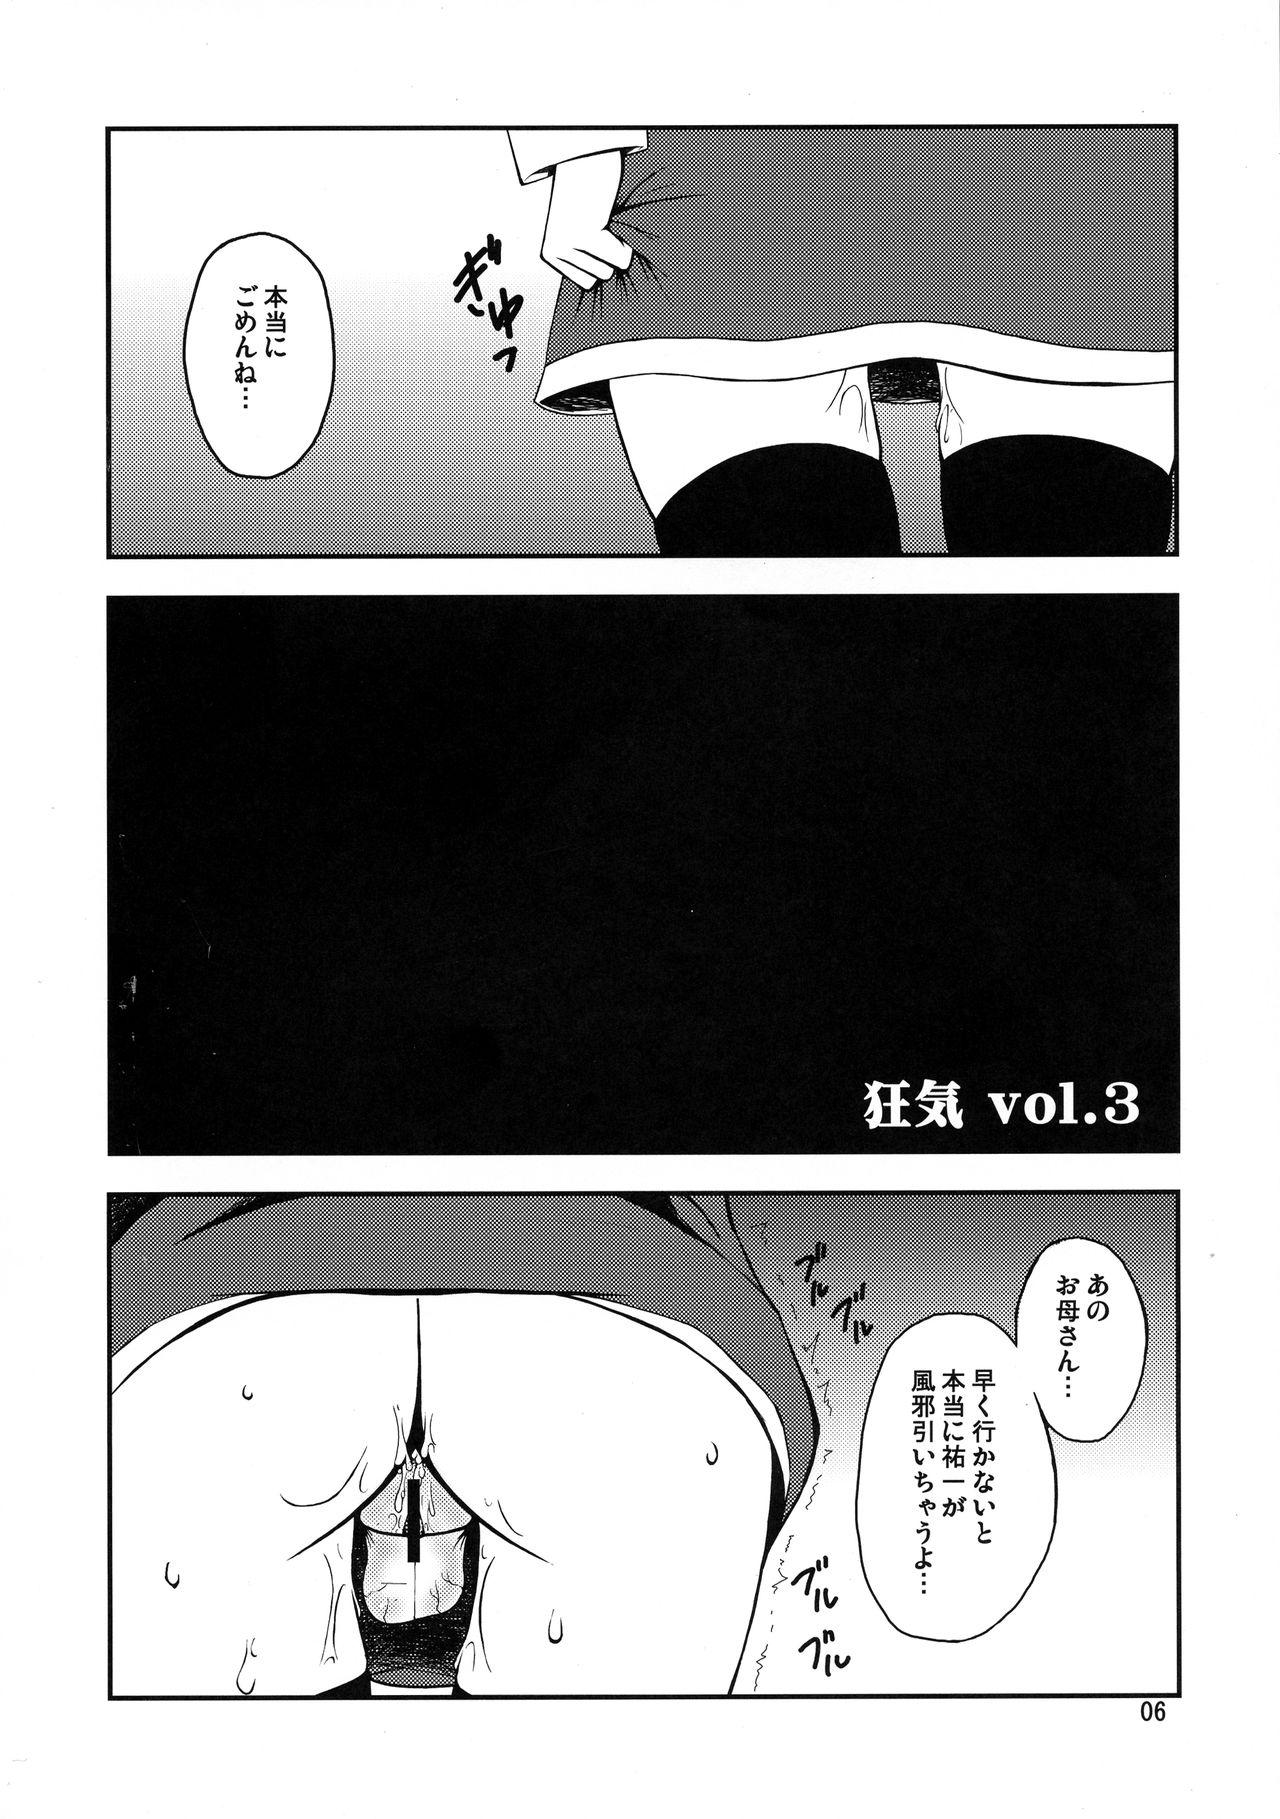 Passion Kyouki Vol. 3~5 Remake Ver. - Kanon Girlfriend - Page 6